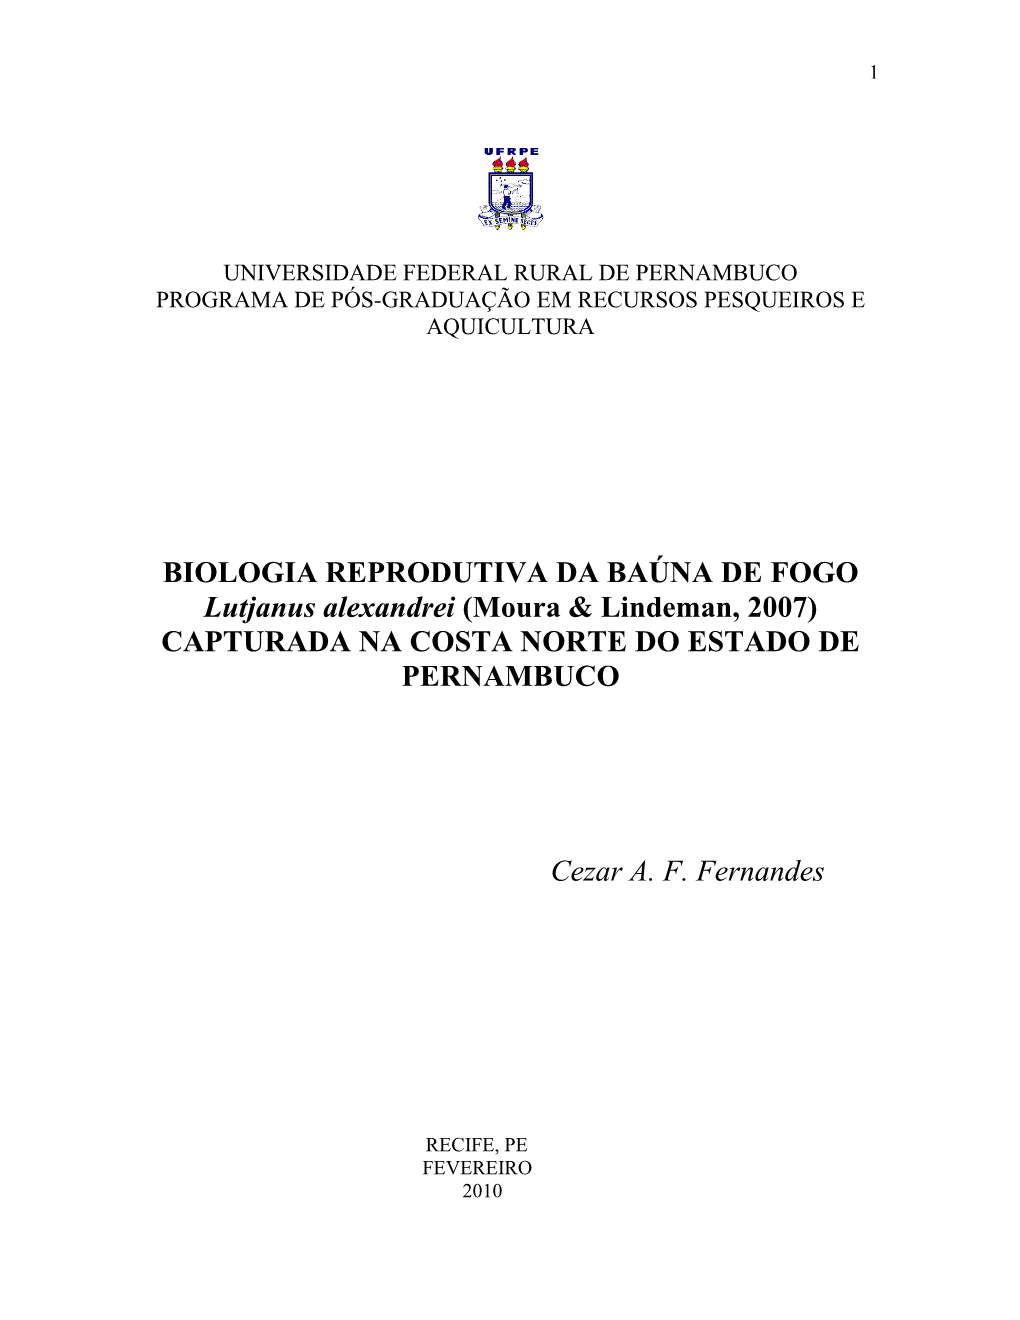 Lutjanus Alexandrei (Moura & Lindeman, 2007) CAPTURADA NA COSTA NORTE DO ESTADO DE PERNAMBUCO